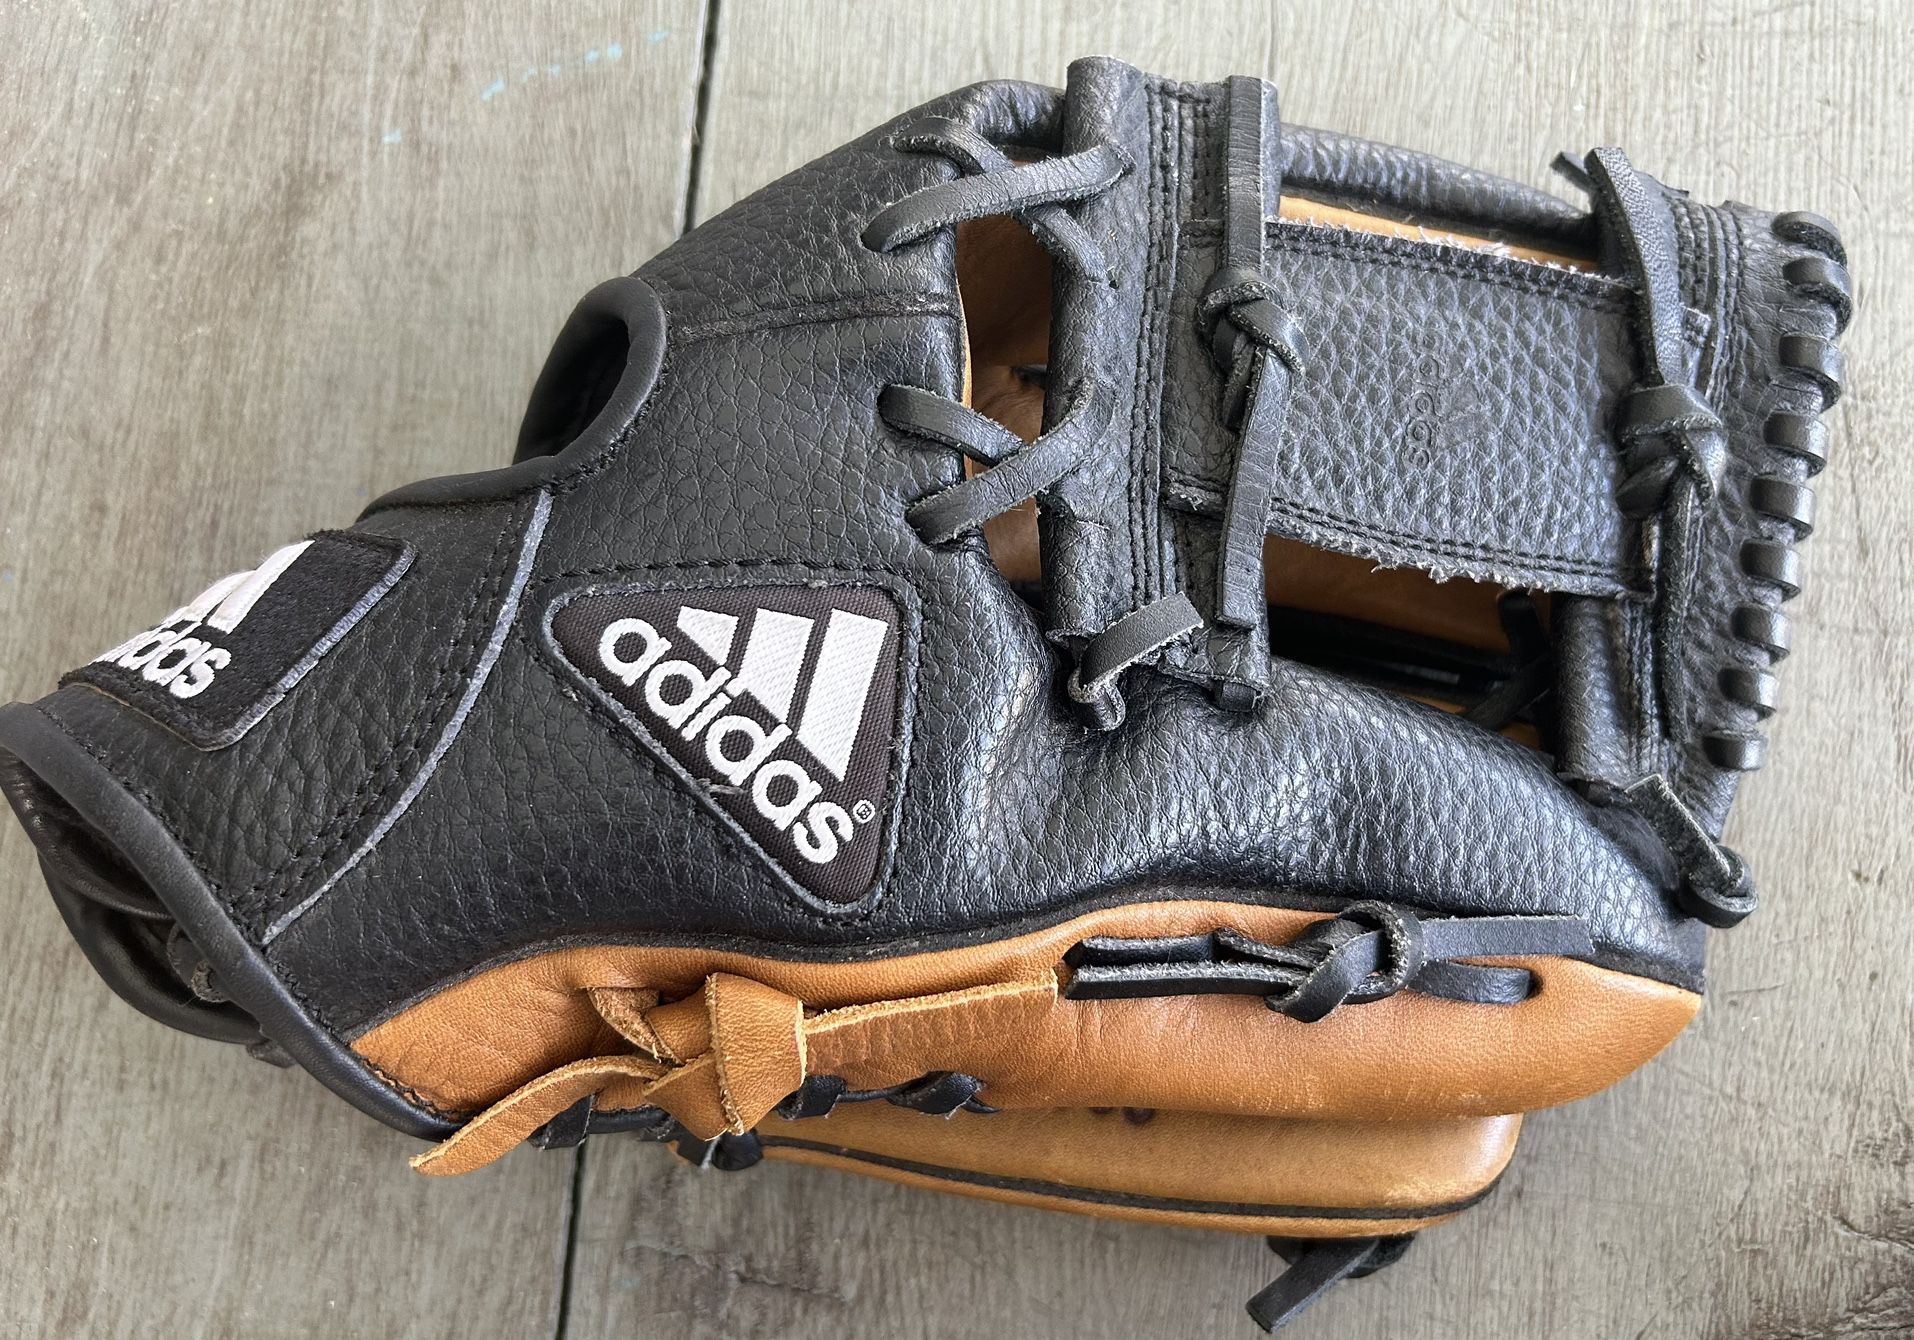 Adidas TR 1150 Adiprene 11.5" Youth Baseball Softball Glove Mitt Leather RHT Right Handed Thrower